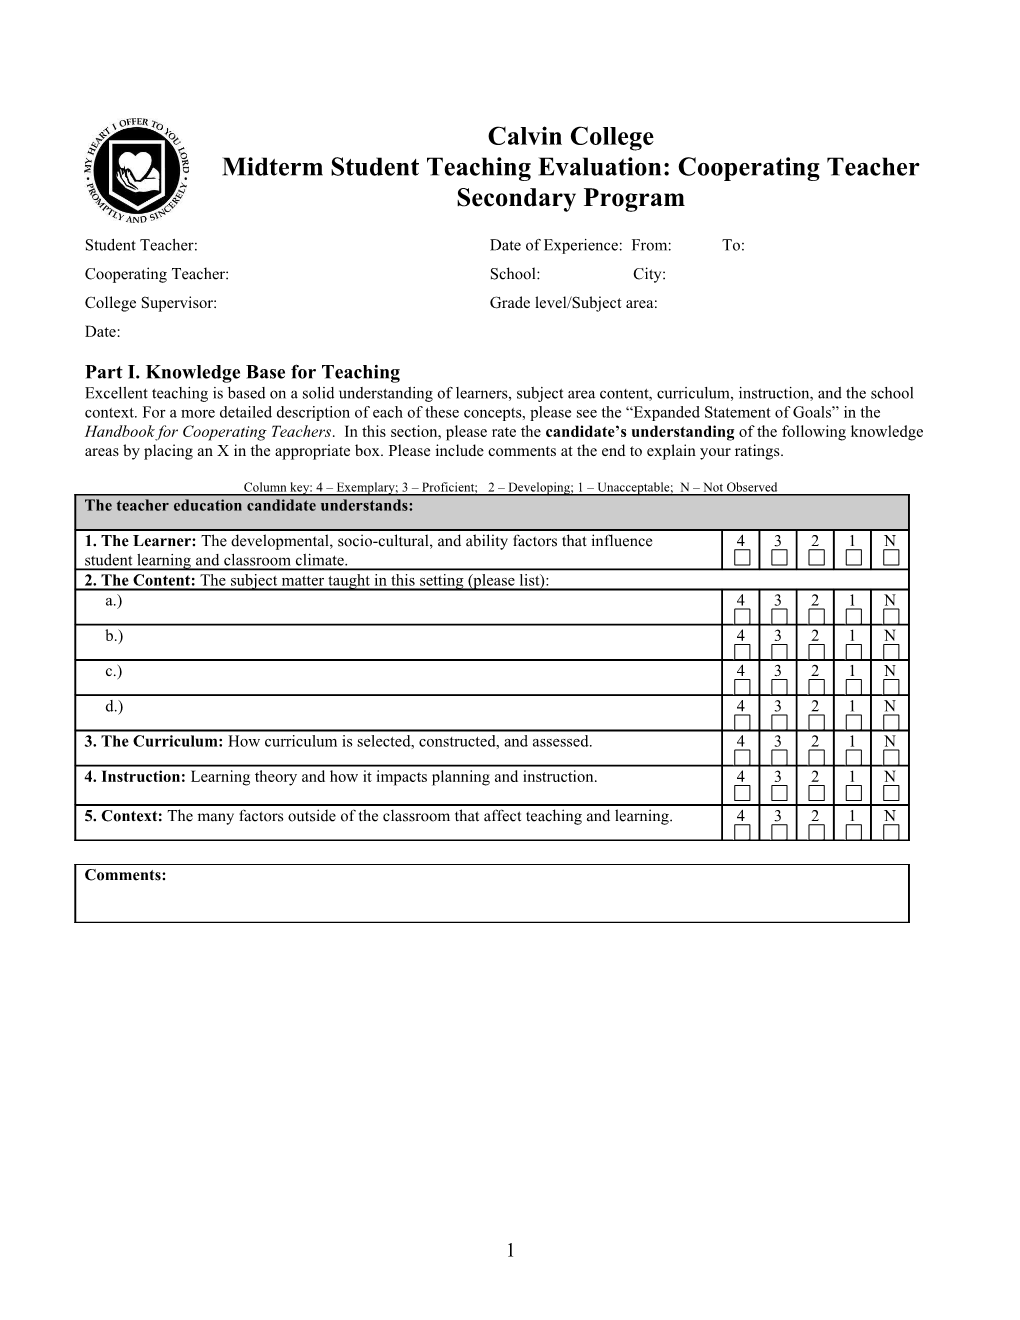 Midterm Student Teaching Evaluation: Cooperating Teacher